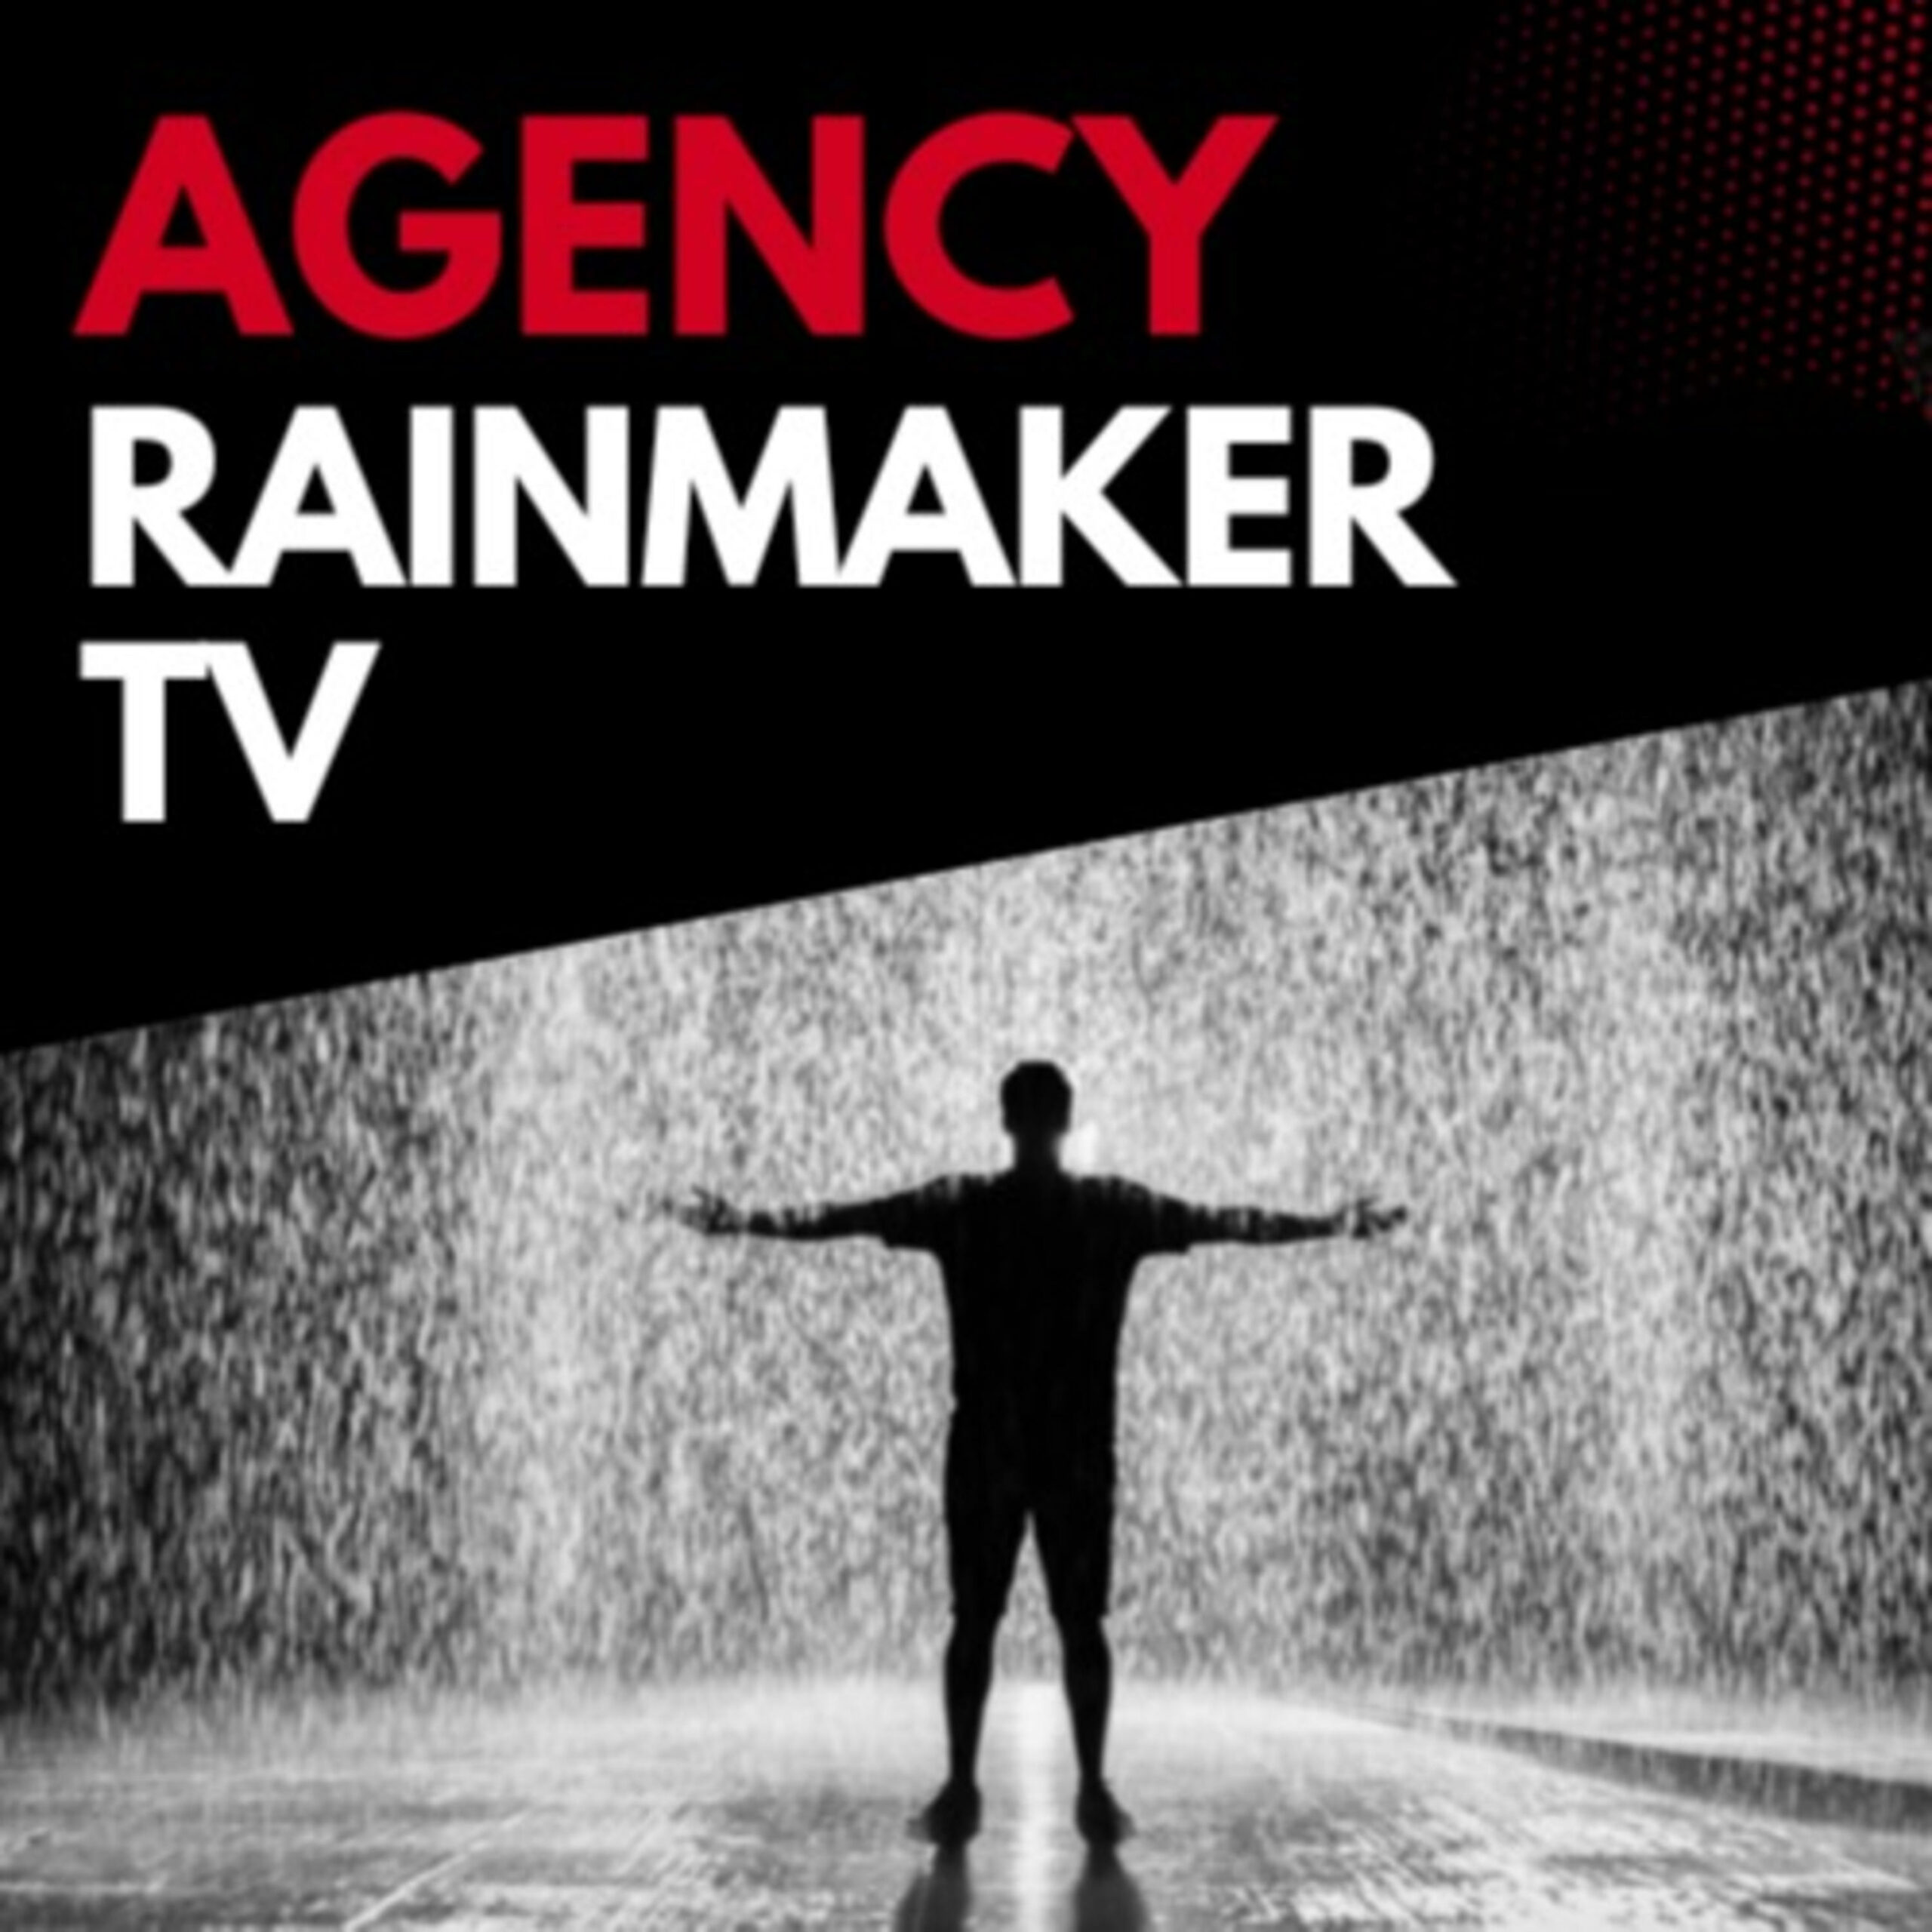 Agency Rainmaker TV